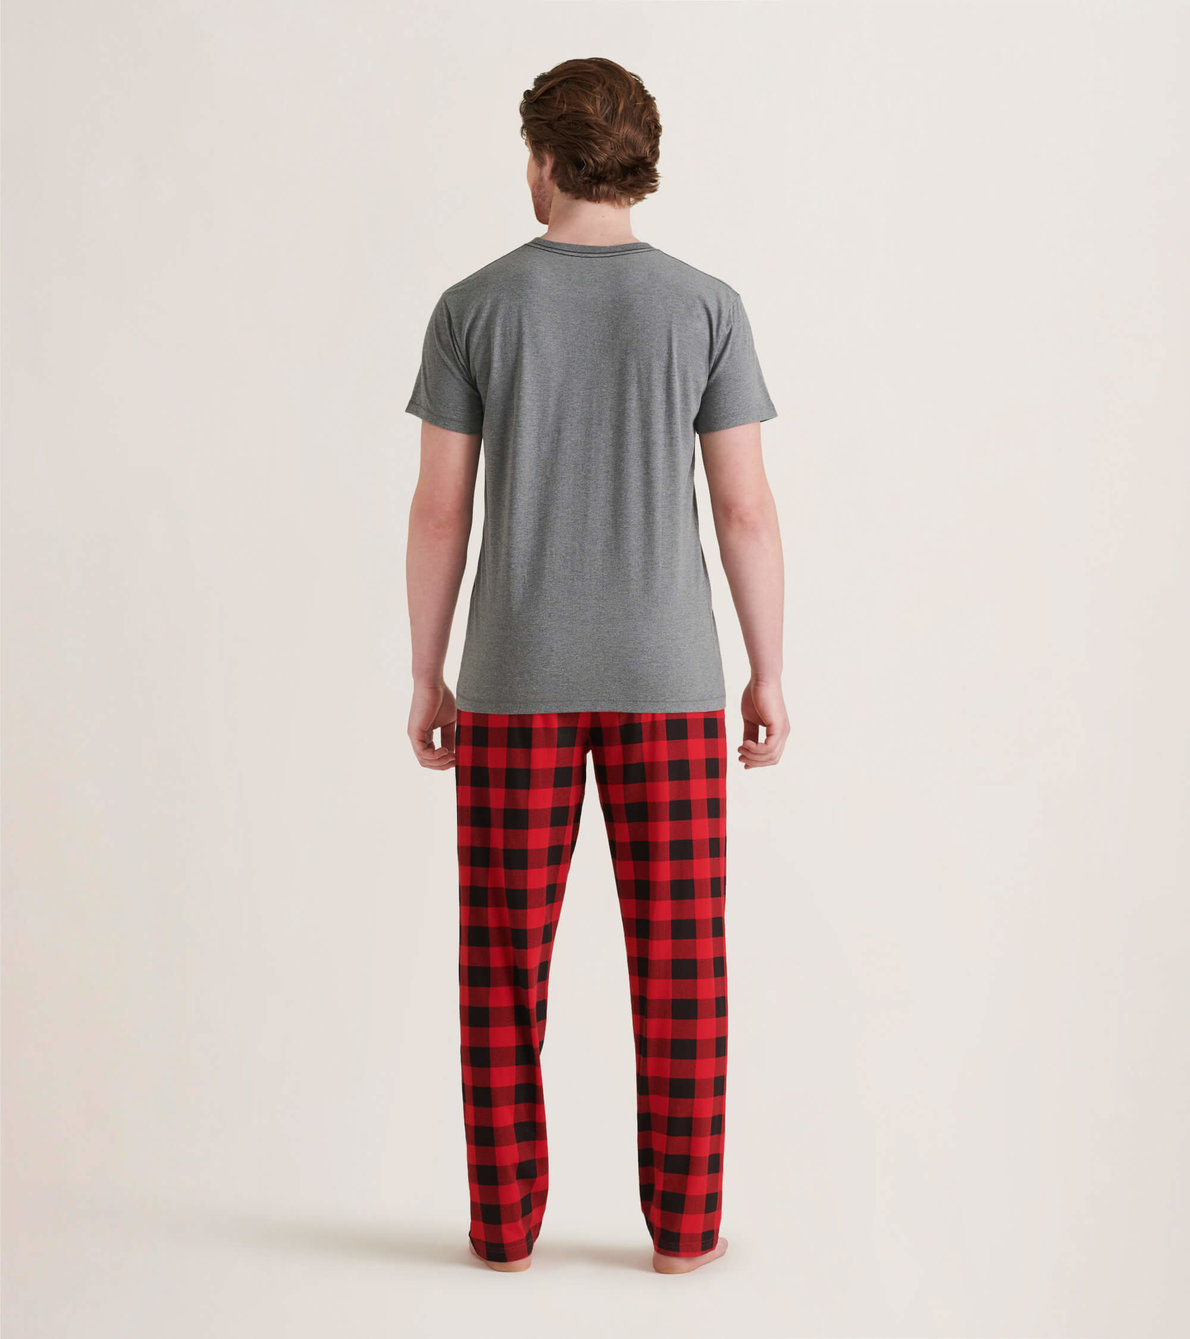 View larger image of Buffalo Plaid Men's Tee and Pants Pajama Separates